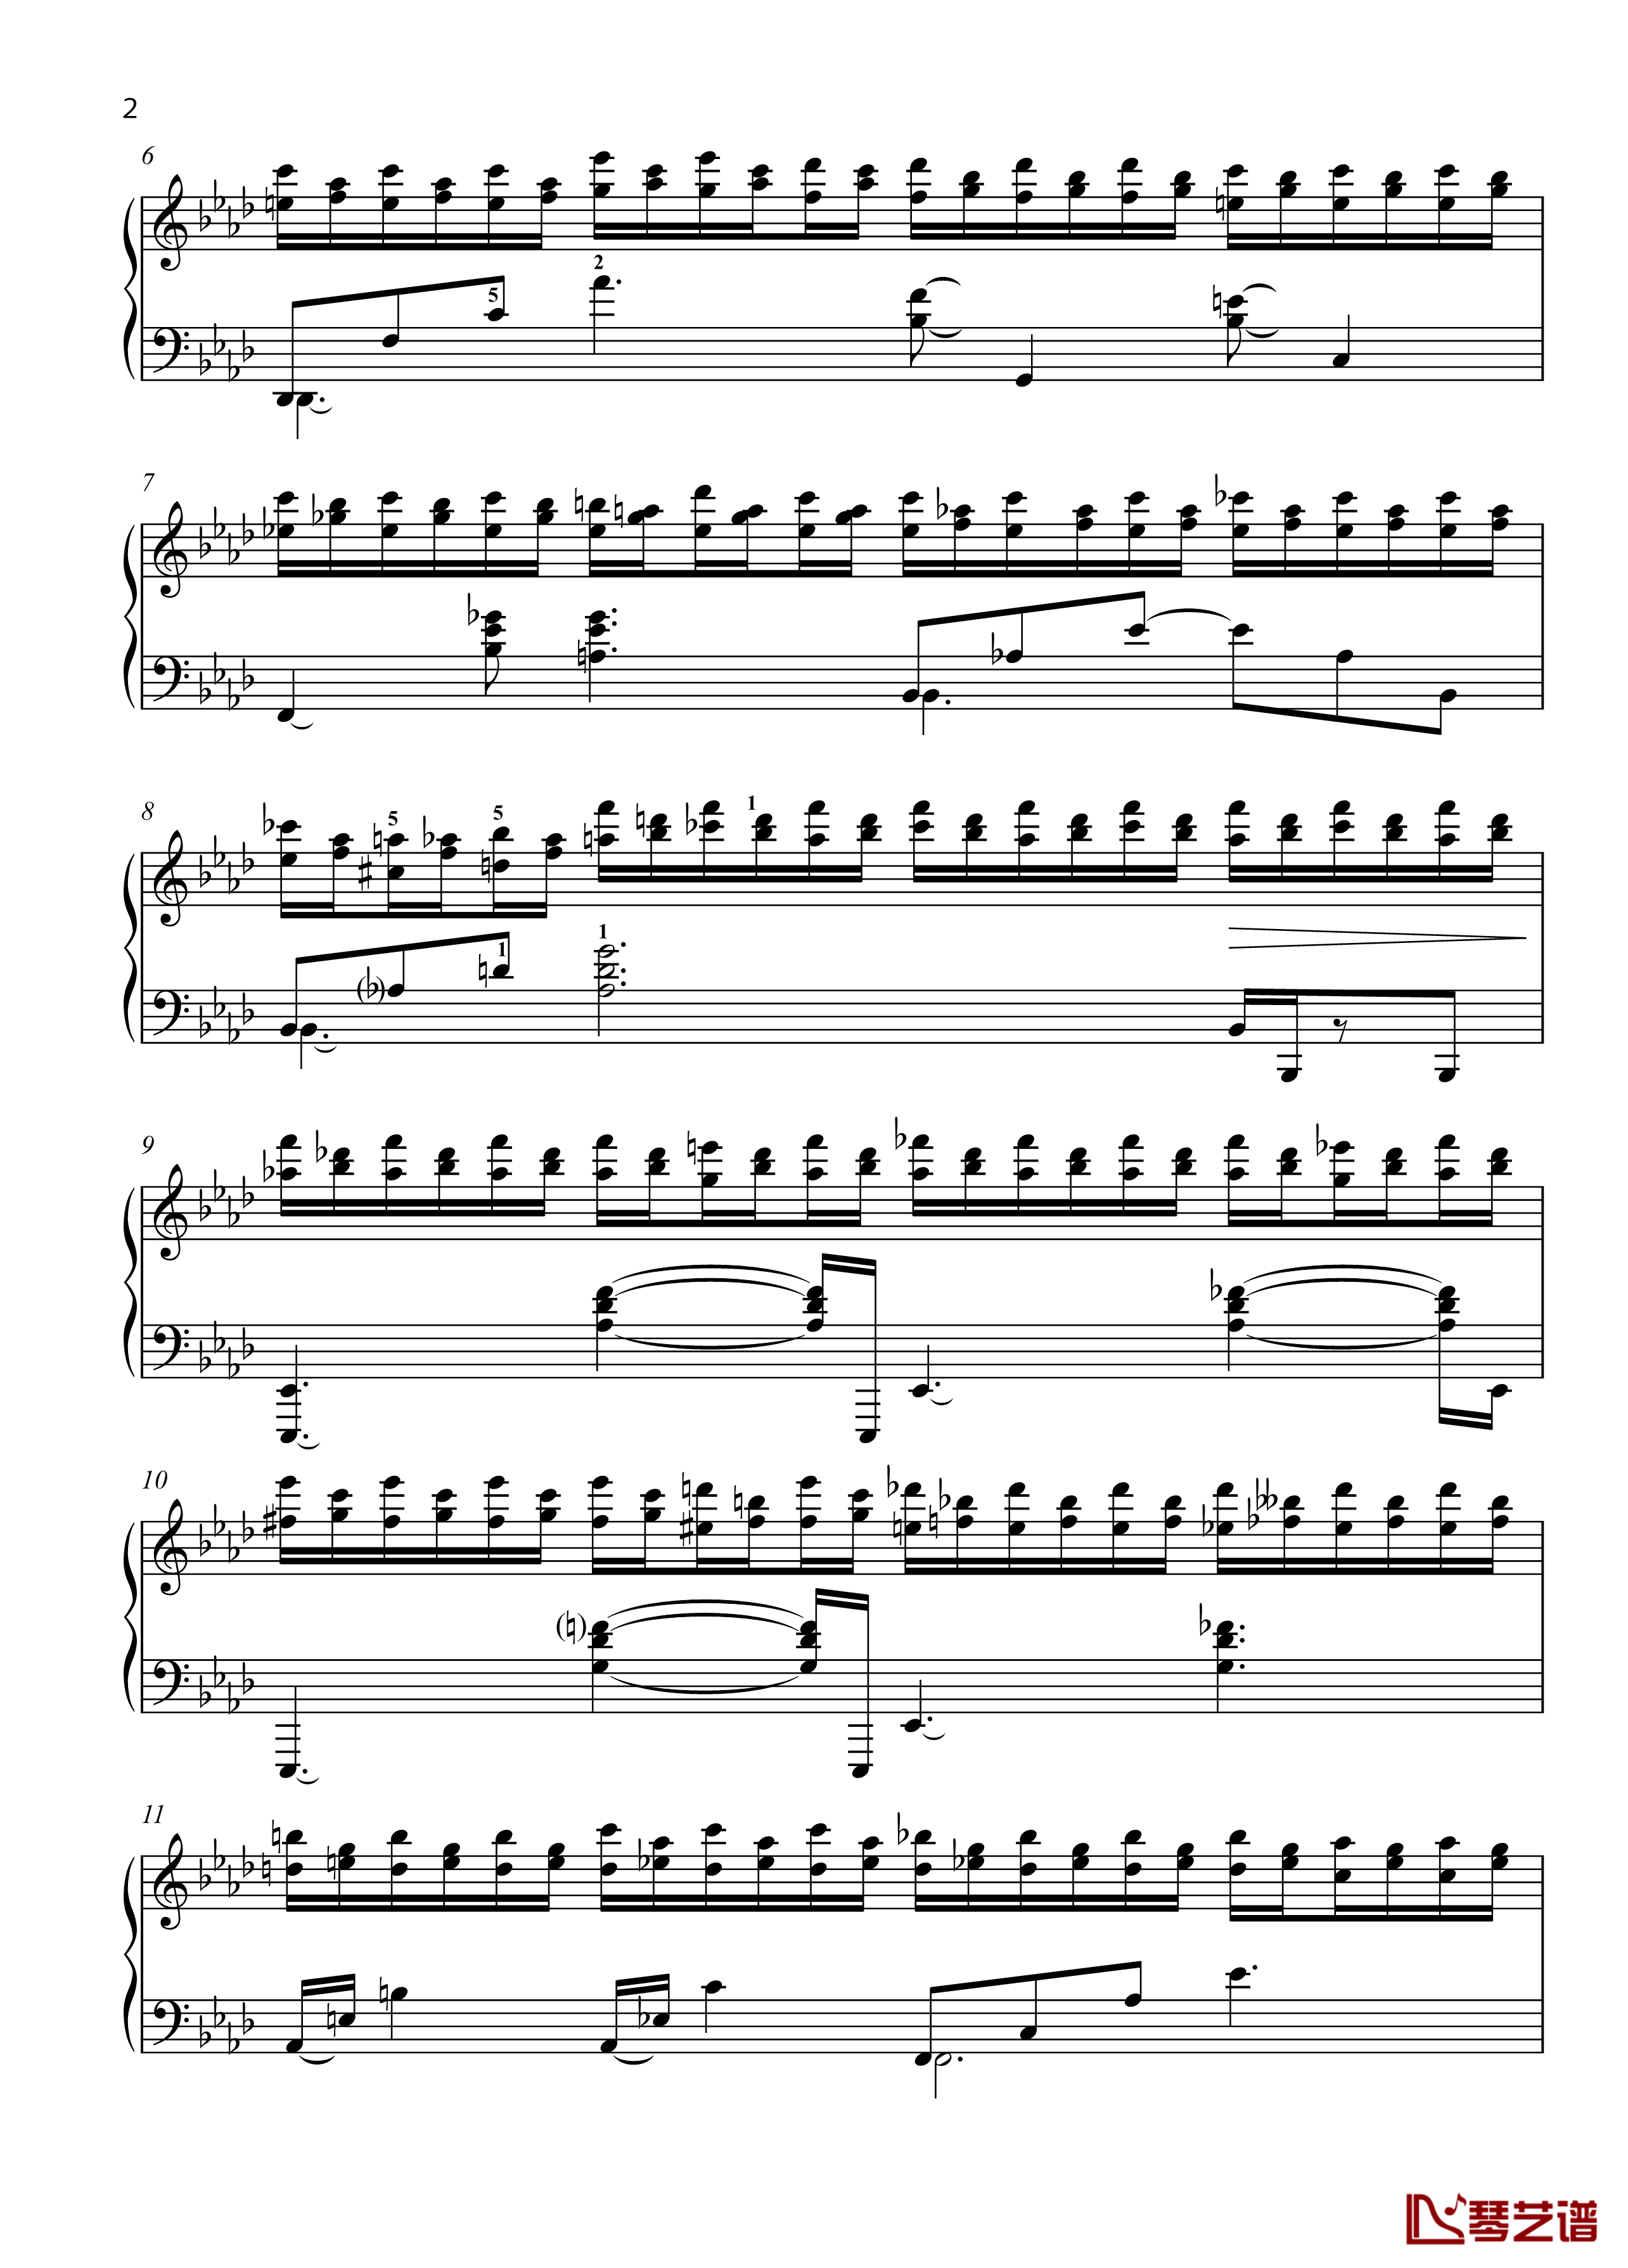 No. 2. Dream. Moderato钢琴谱-带指法- 八首音乐会练习曲 Eight Concert ?tudes Op 40 -爵士-尼古拉·凯帕斯汀2